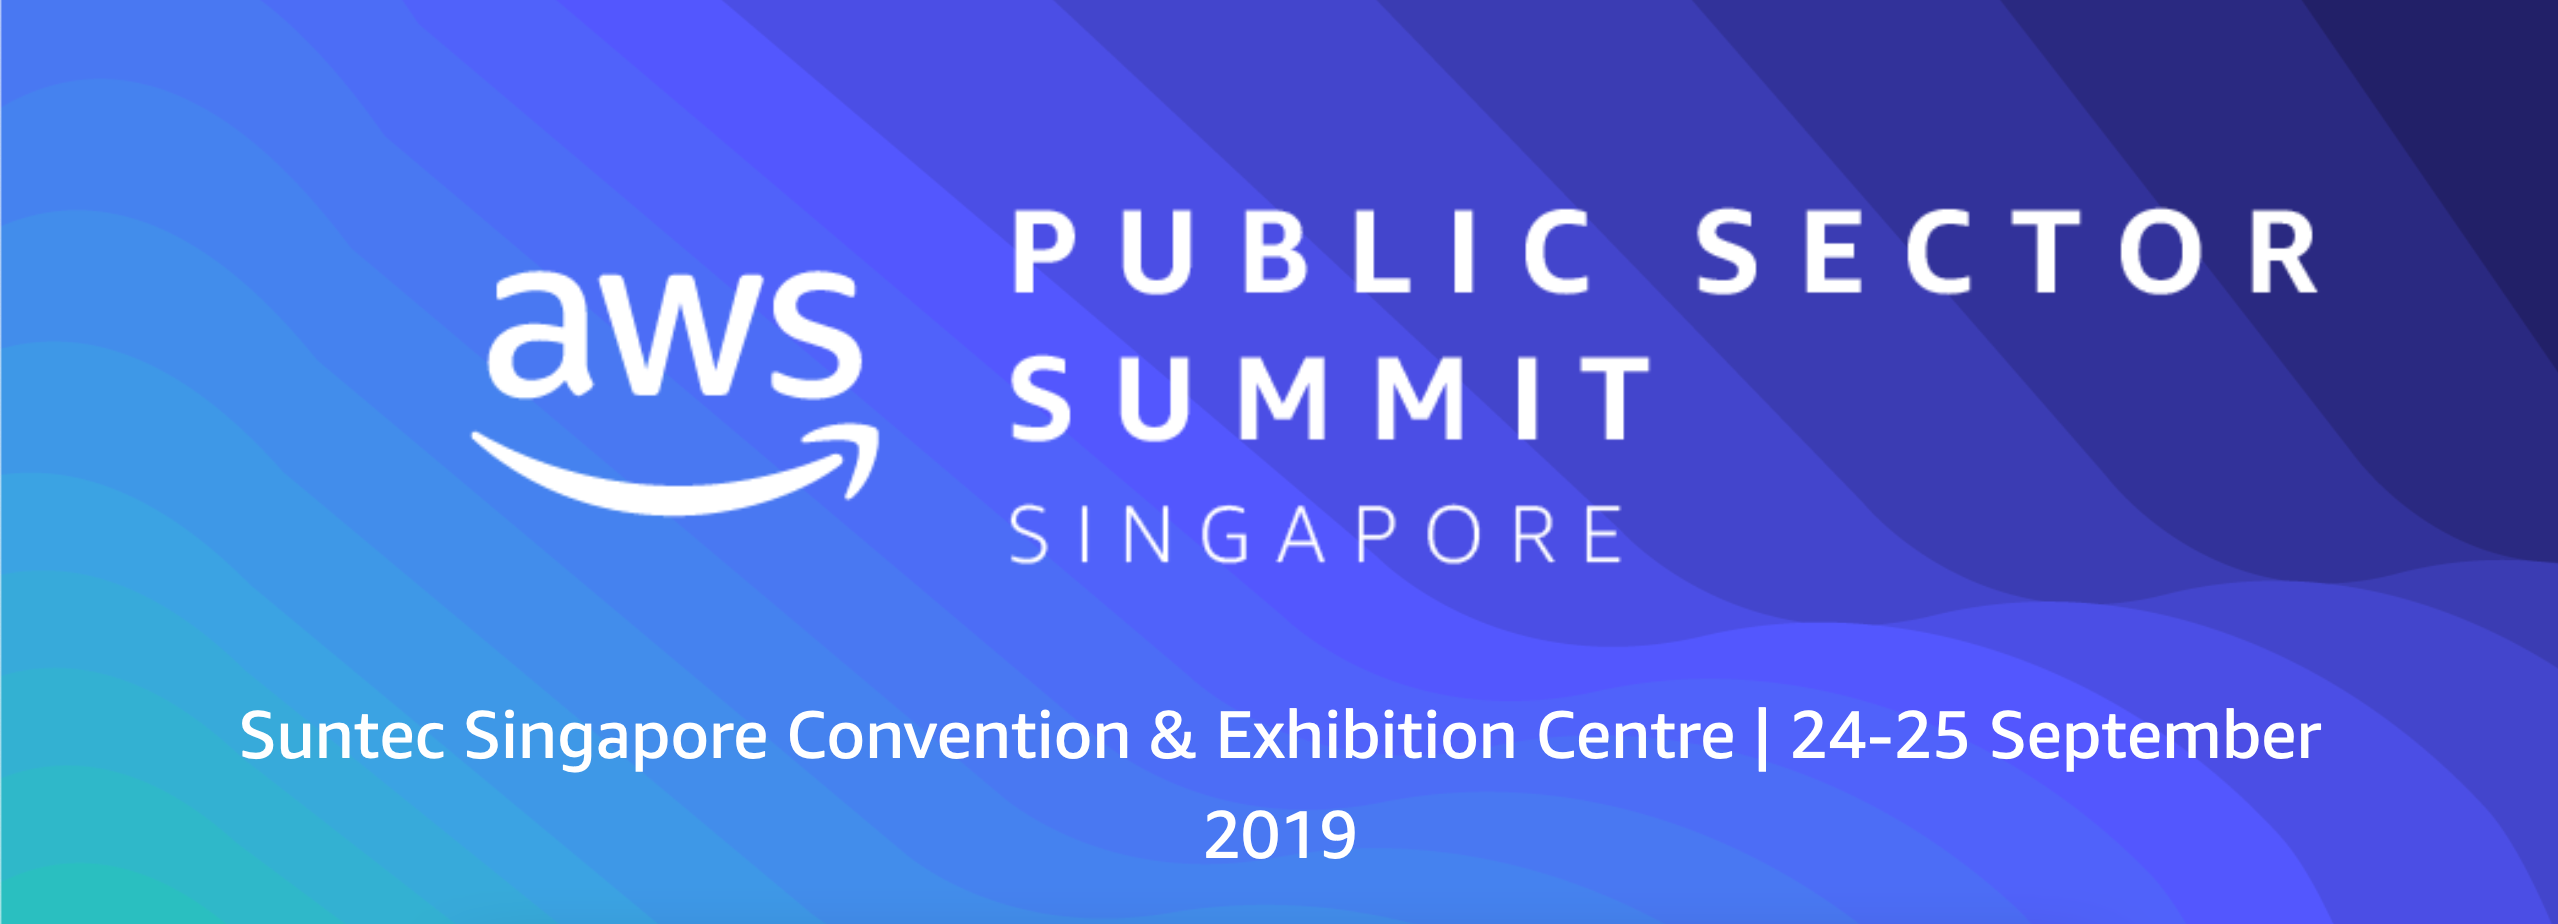 AWS Public Sector Summit 2019